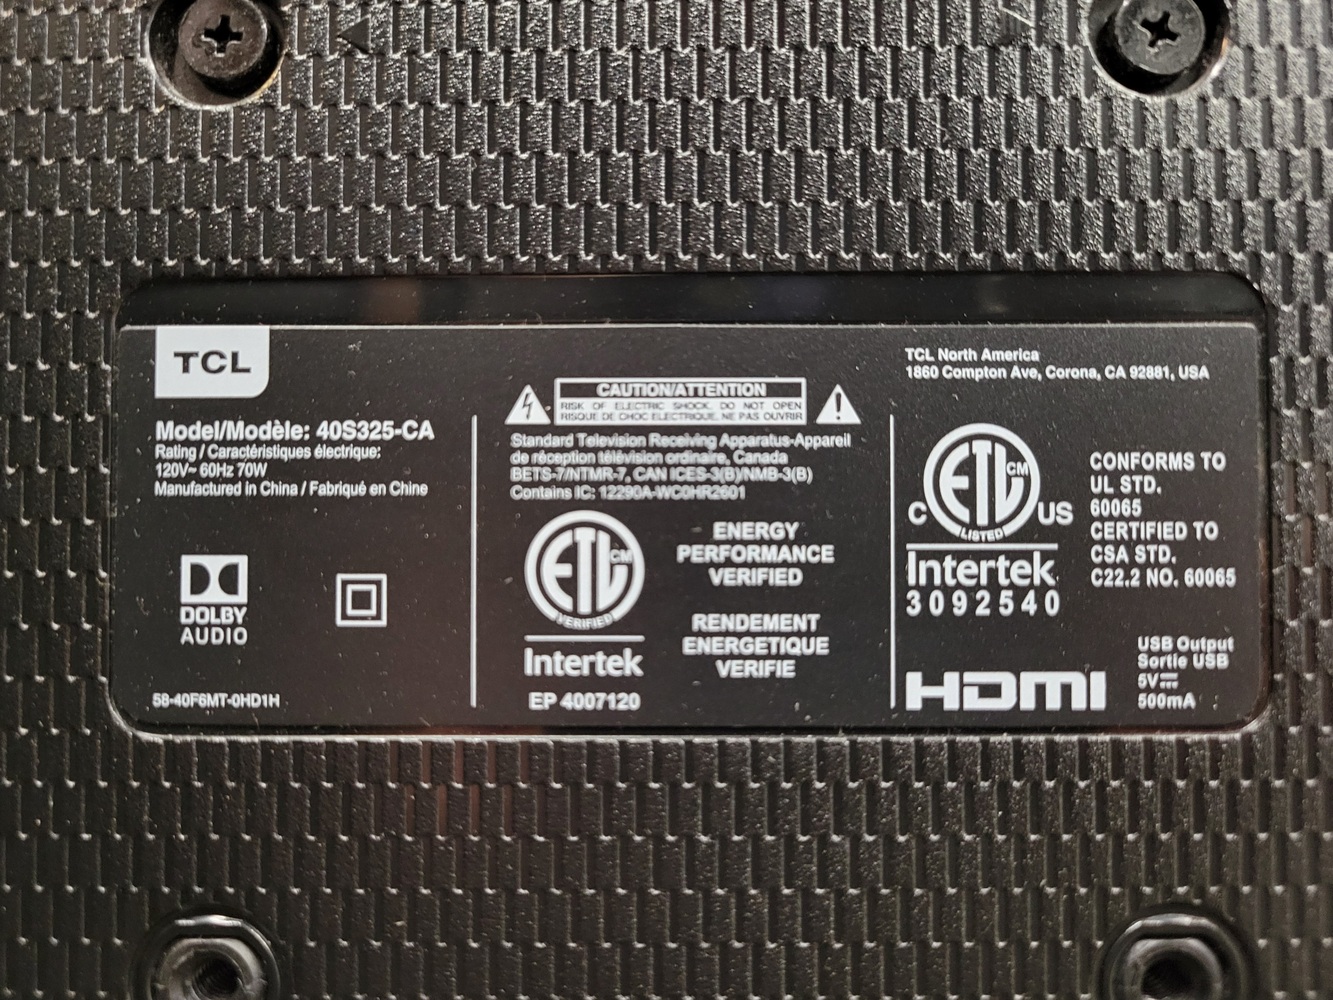 TCL 40 Class 1080P FHD LED Roku Smart TV 3 Series 40S325